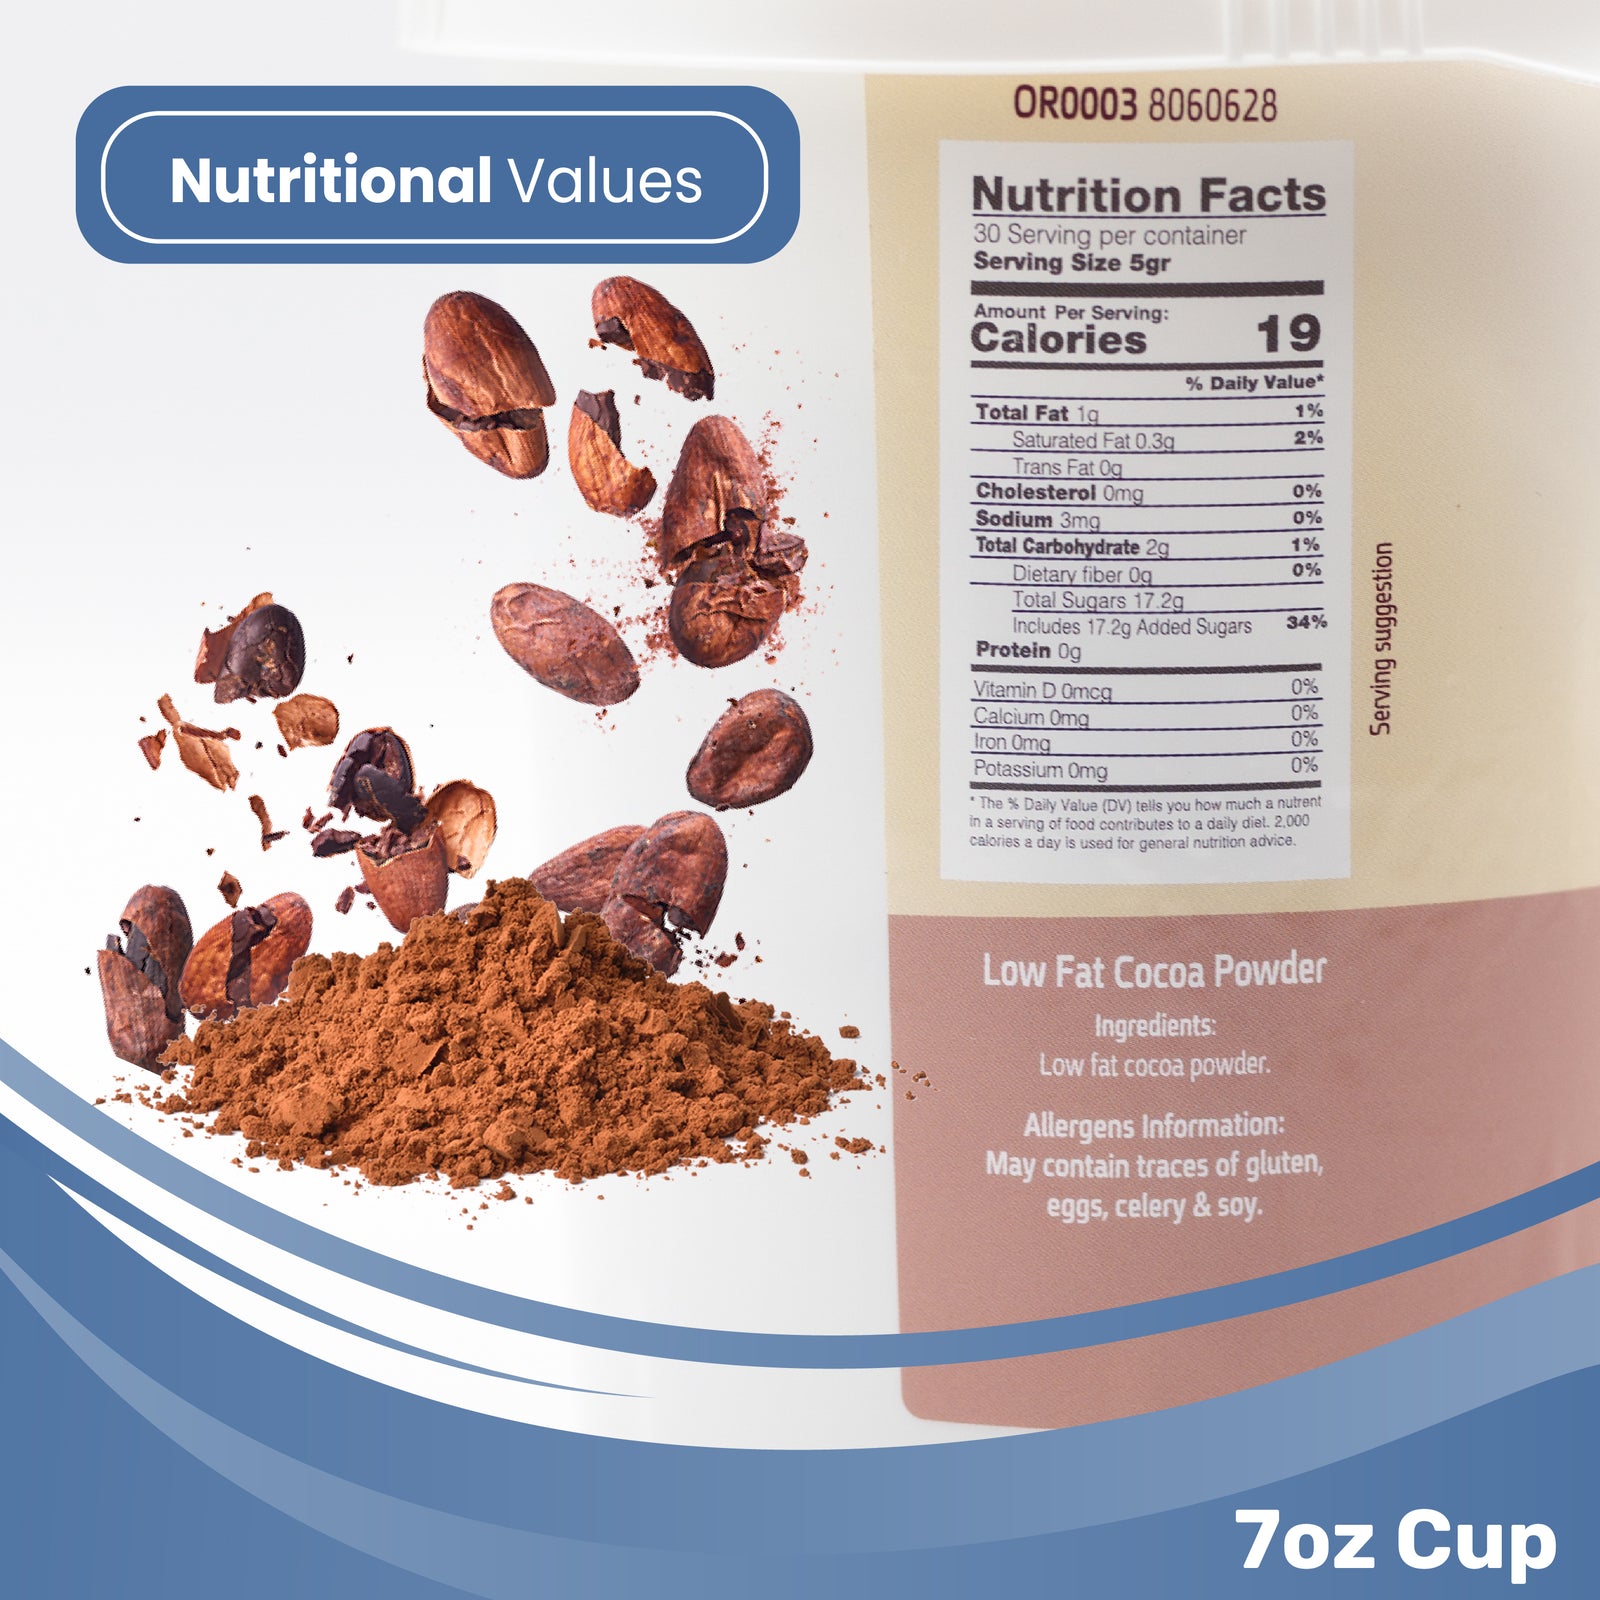 Oriel 100% Cocoa Low Fat 10-12%